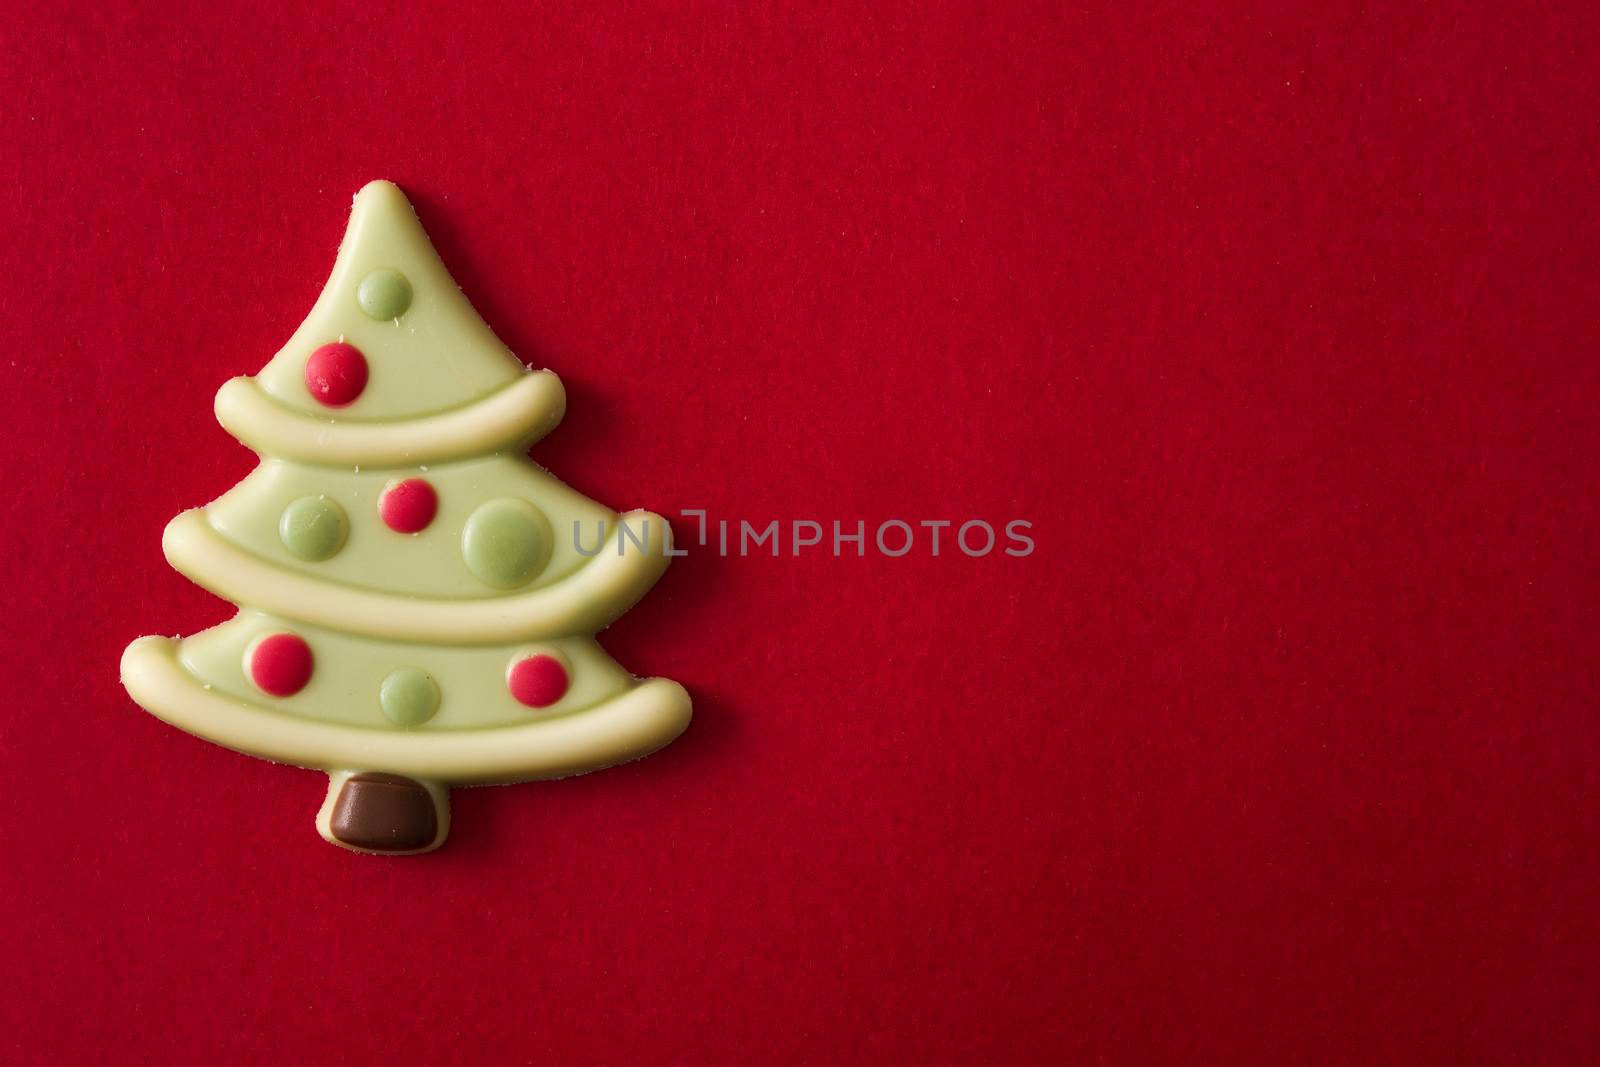 Christmas tree chocolate bonbon  by chandlervid85